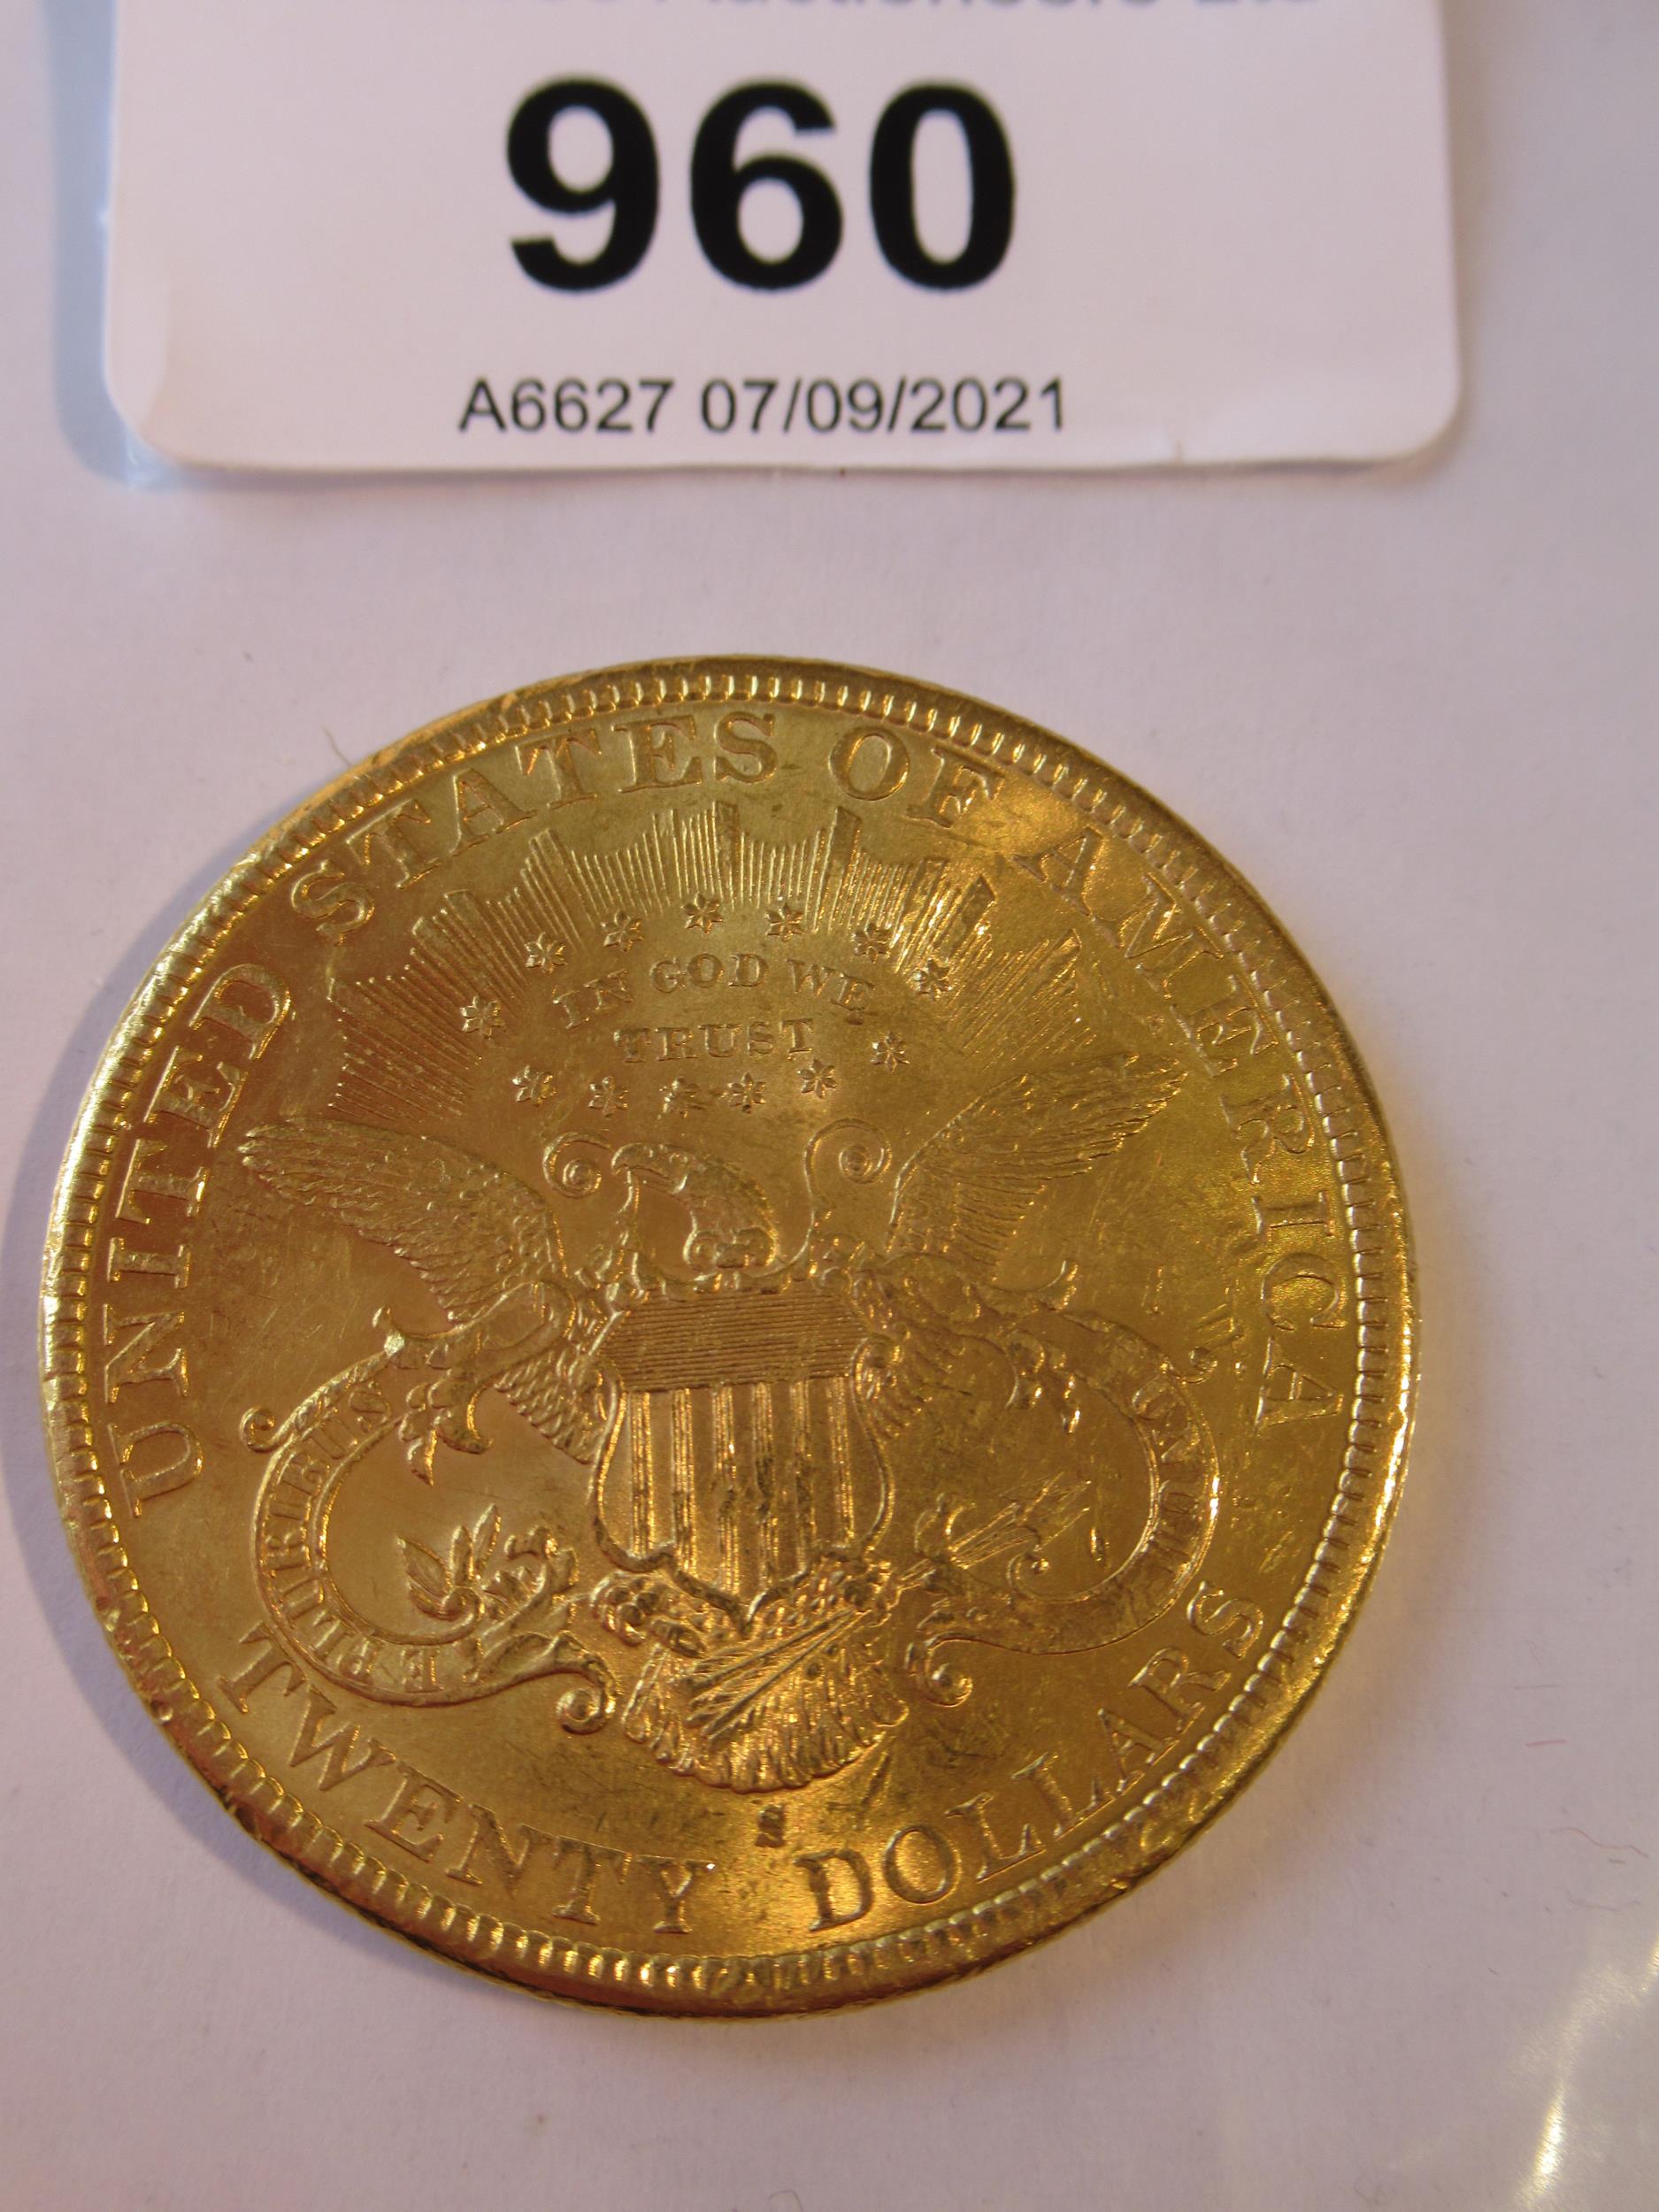 U.S.A. 1899 twenty dollar gold coin, 33g - Image 2 of 2